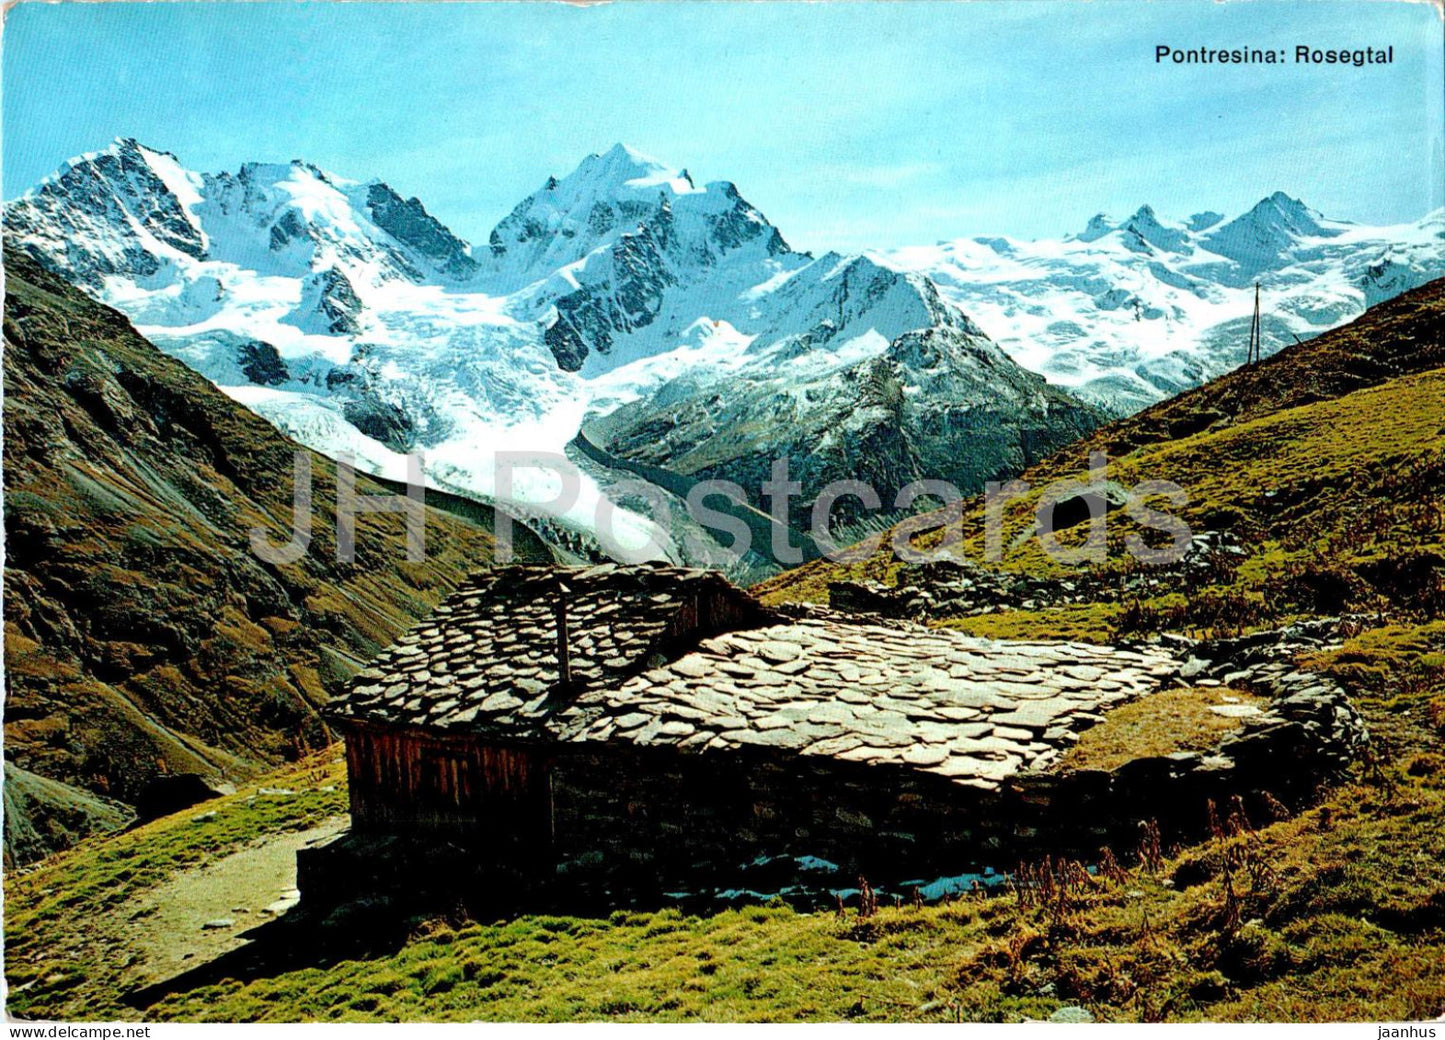 Pontresina - Rosegtal - Piz Bernina - Piz Roseg - Sellagruppe - 955 - 1975 - Switzerland - used - JH Postcards